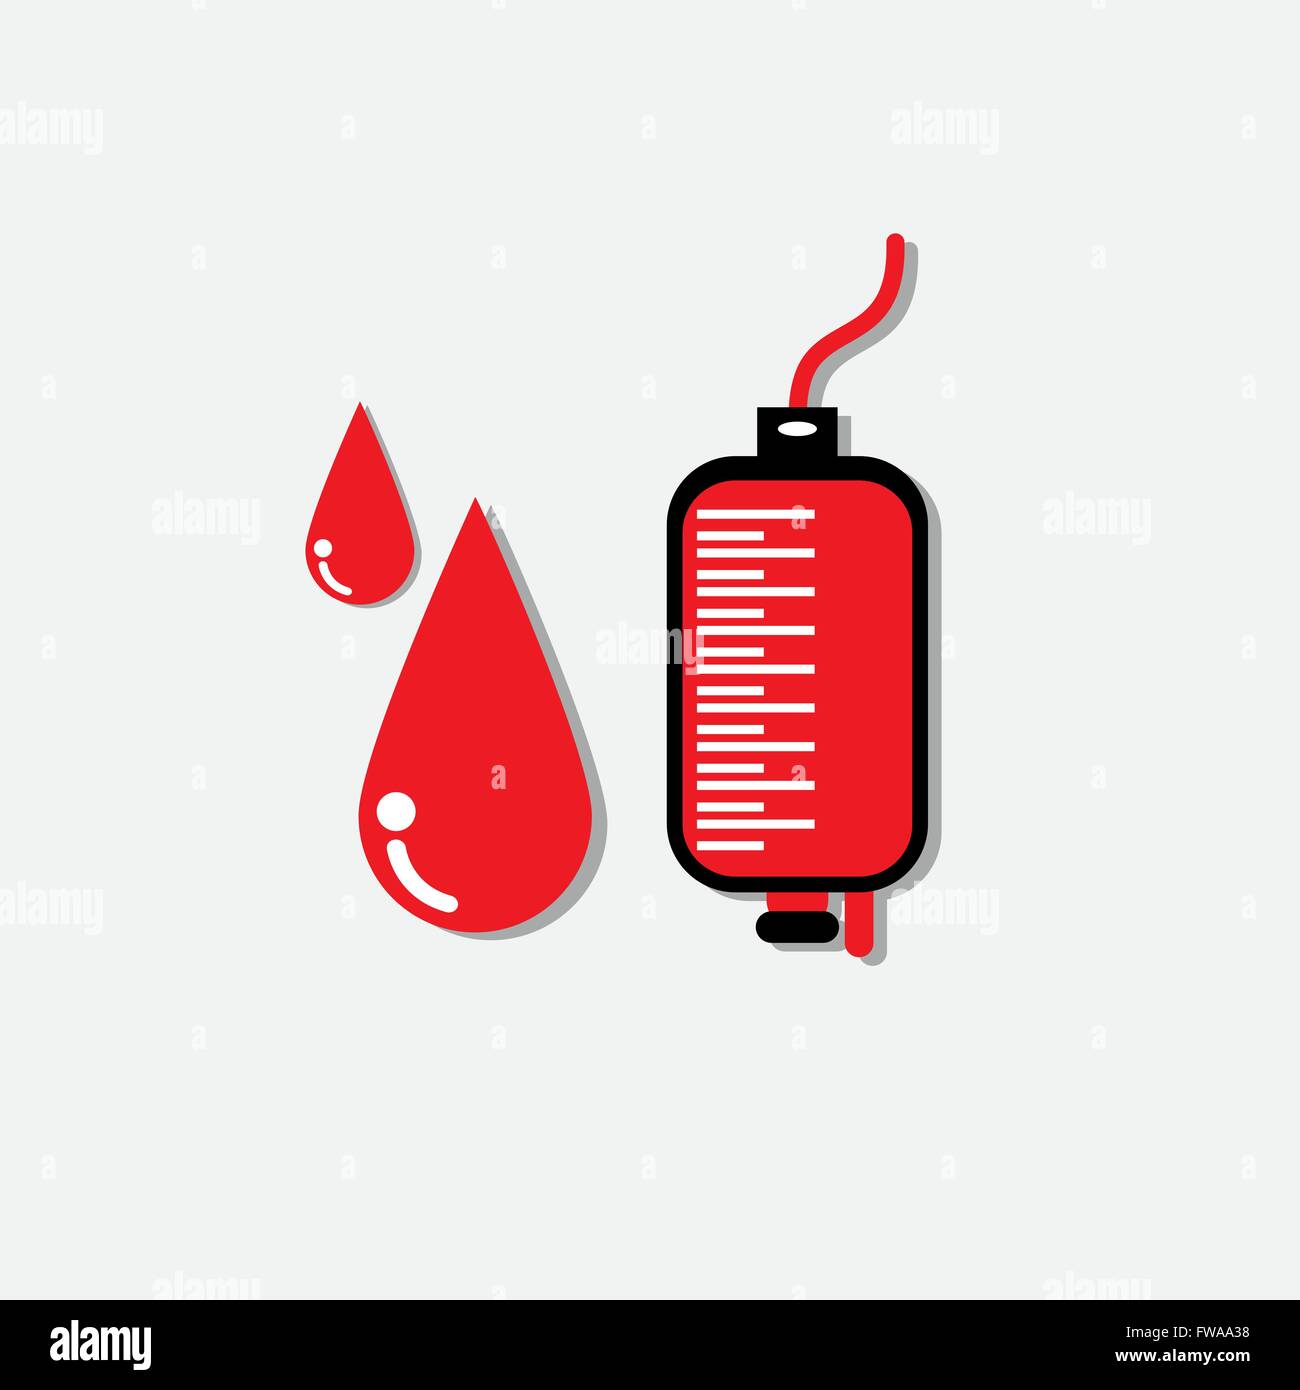 Blood donation medicine help hospital save life heart Stock Vector